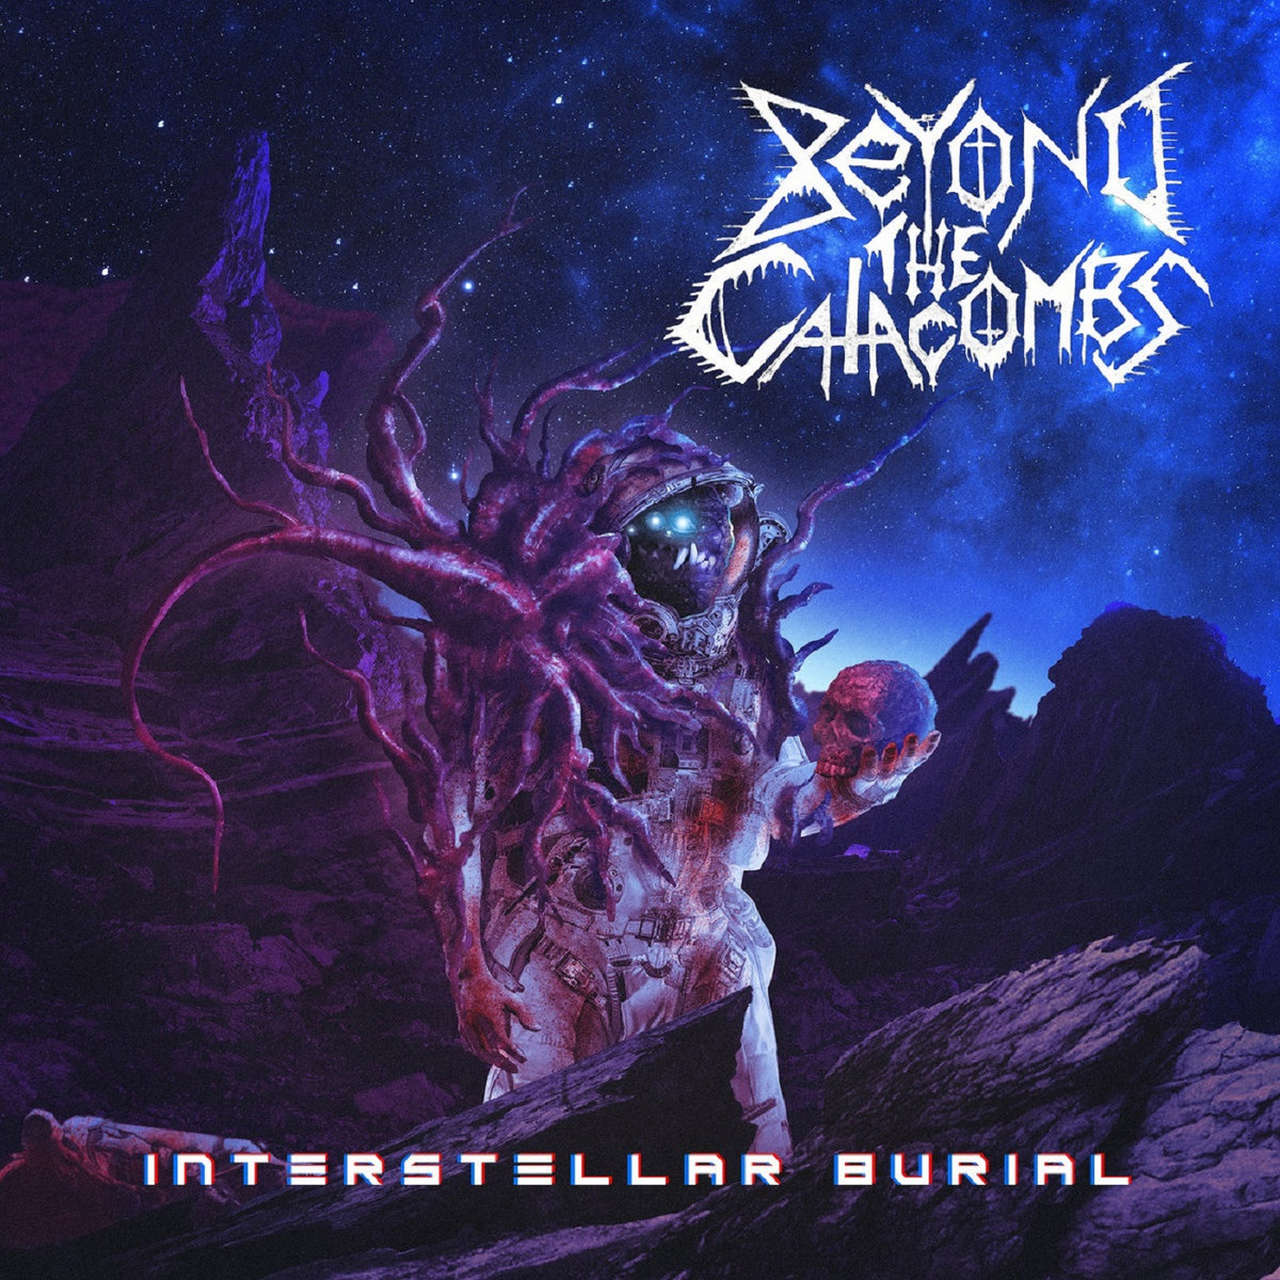 Beyond the Catacombs - Interstellar Burial (Digipak CD)